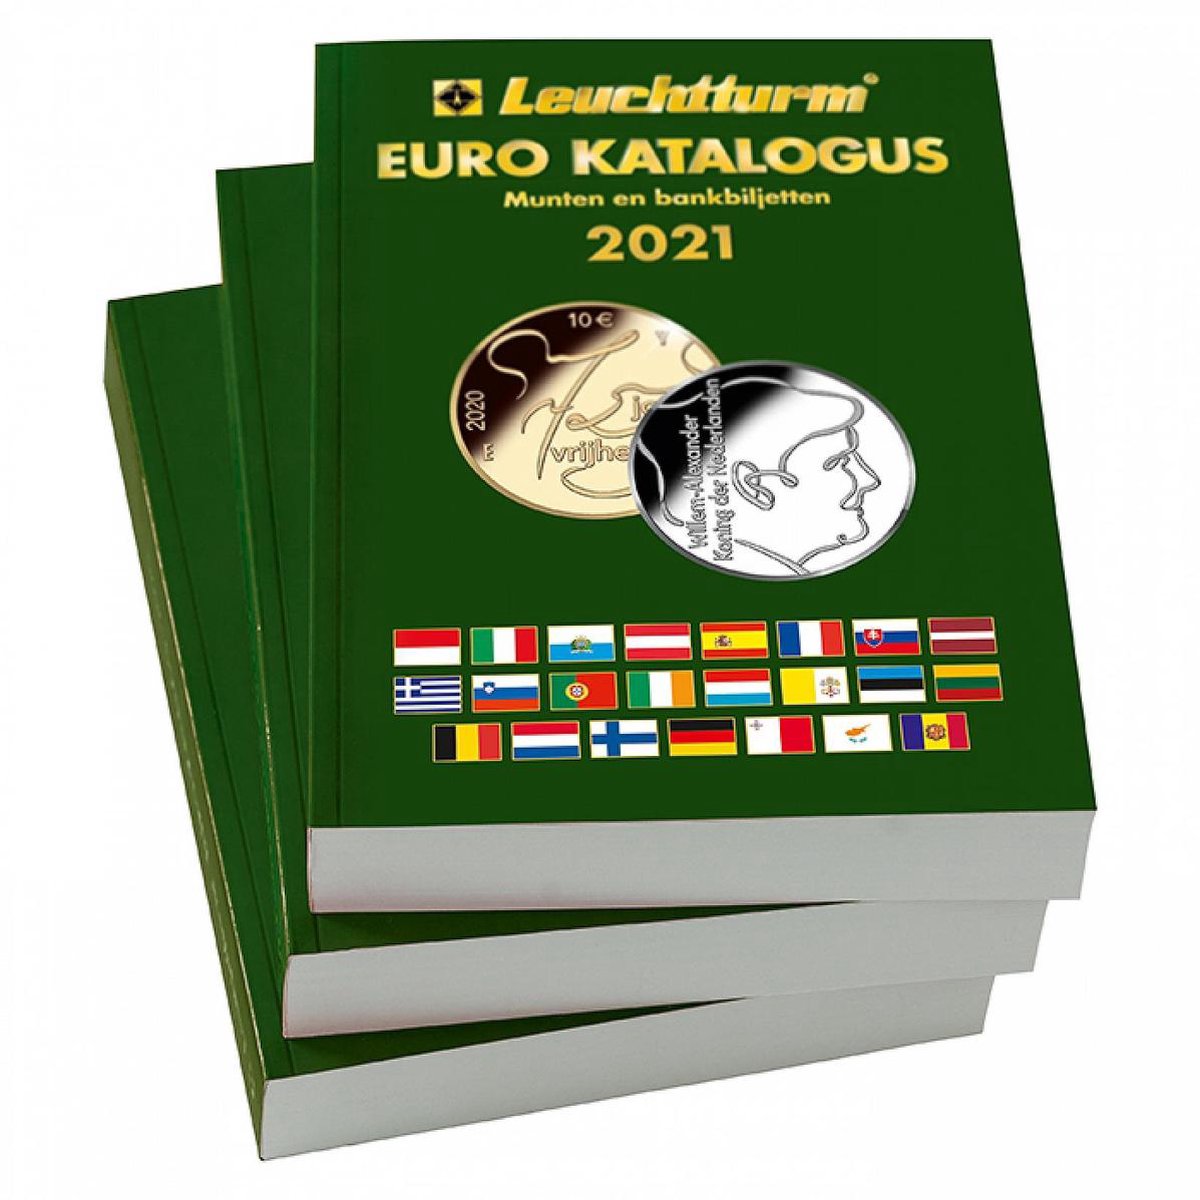 Euro Katalogus Munten en bankbiljetten 2021